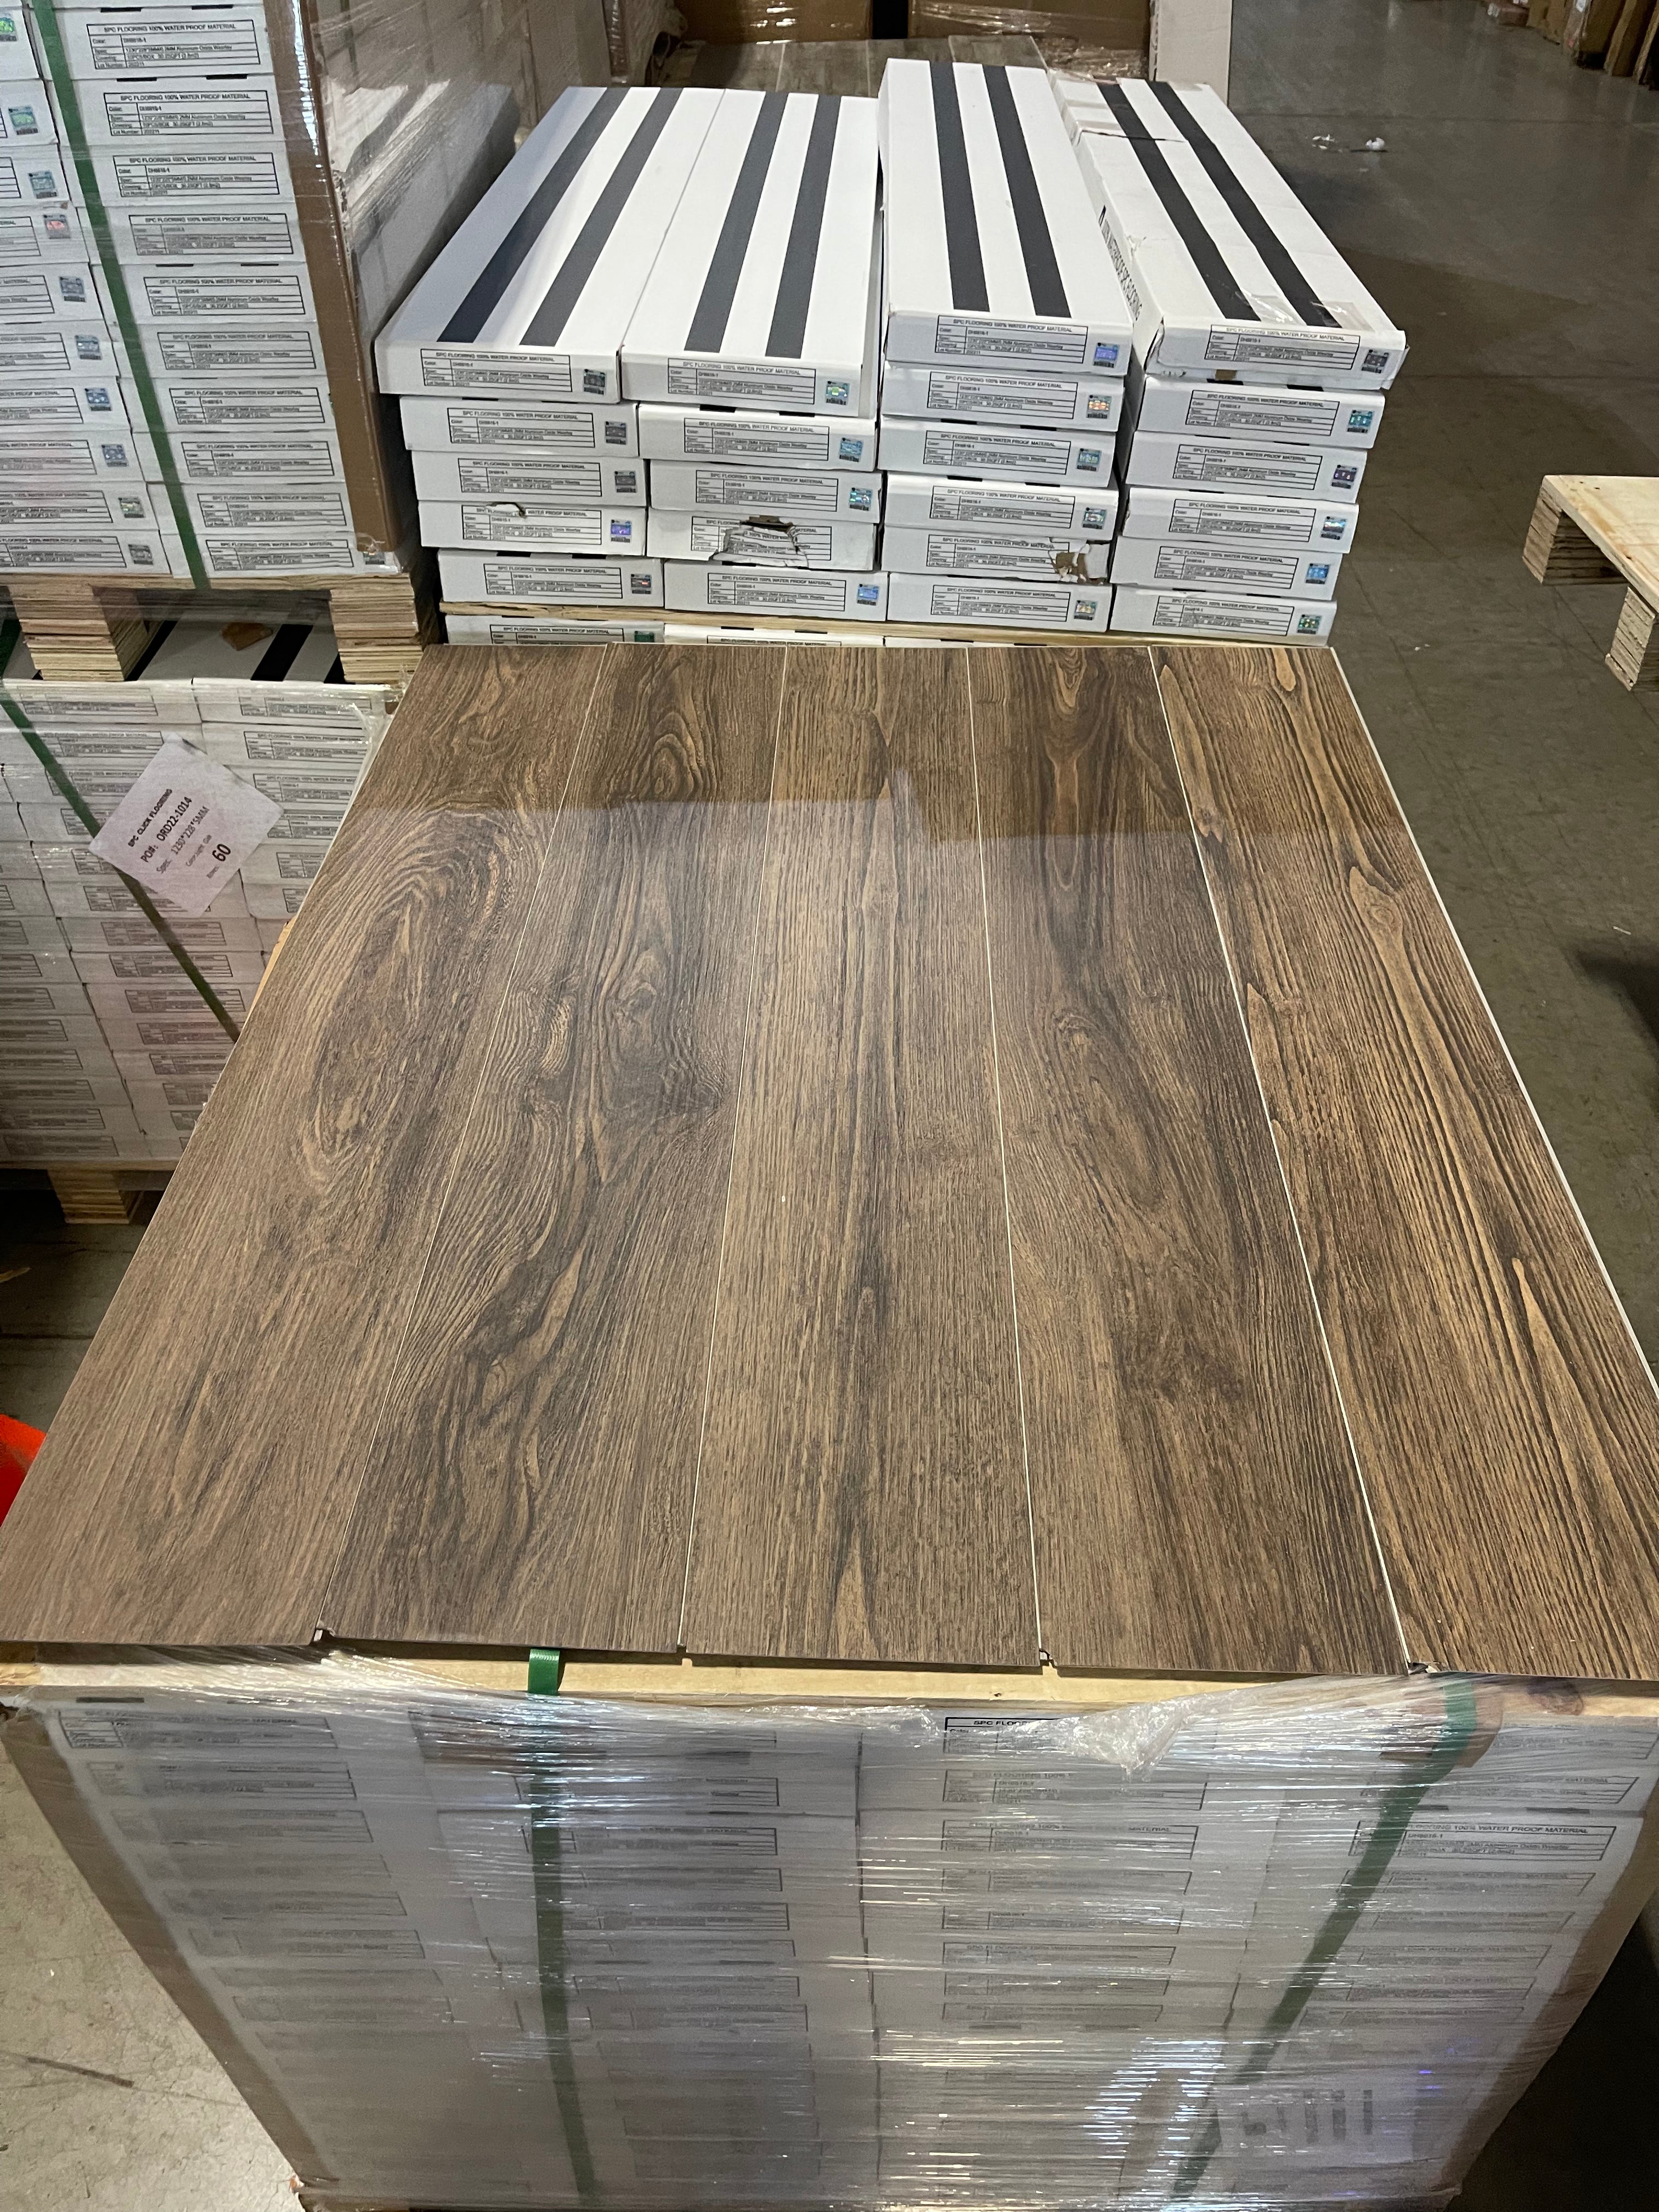 Vinyl Flooring Planks $1.69 sqft 30 sqft per box, priced per box - $50